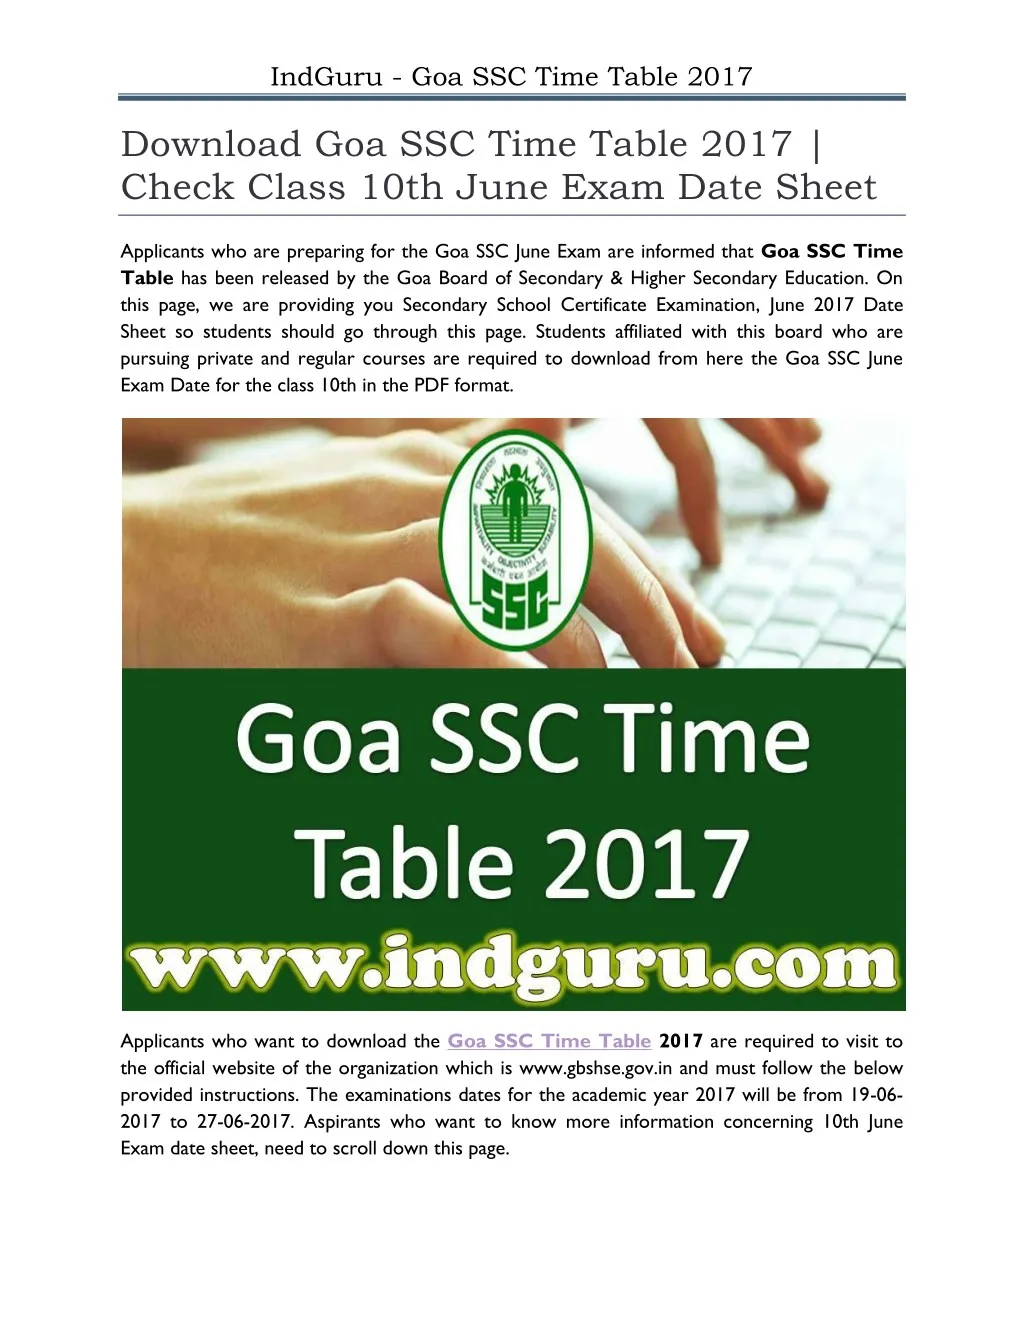 indguru goa ssc time table 2017